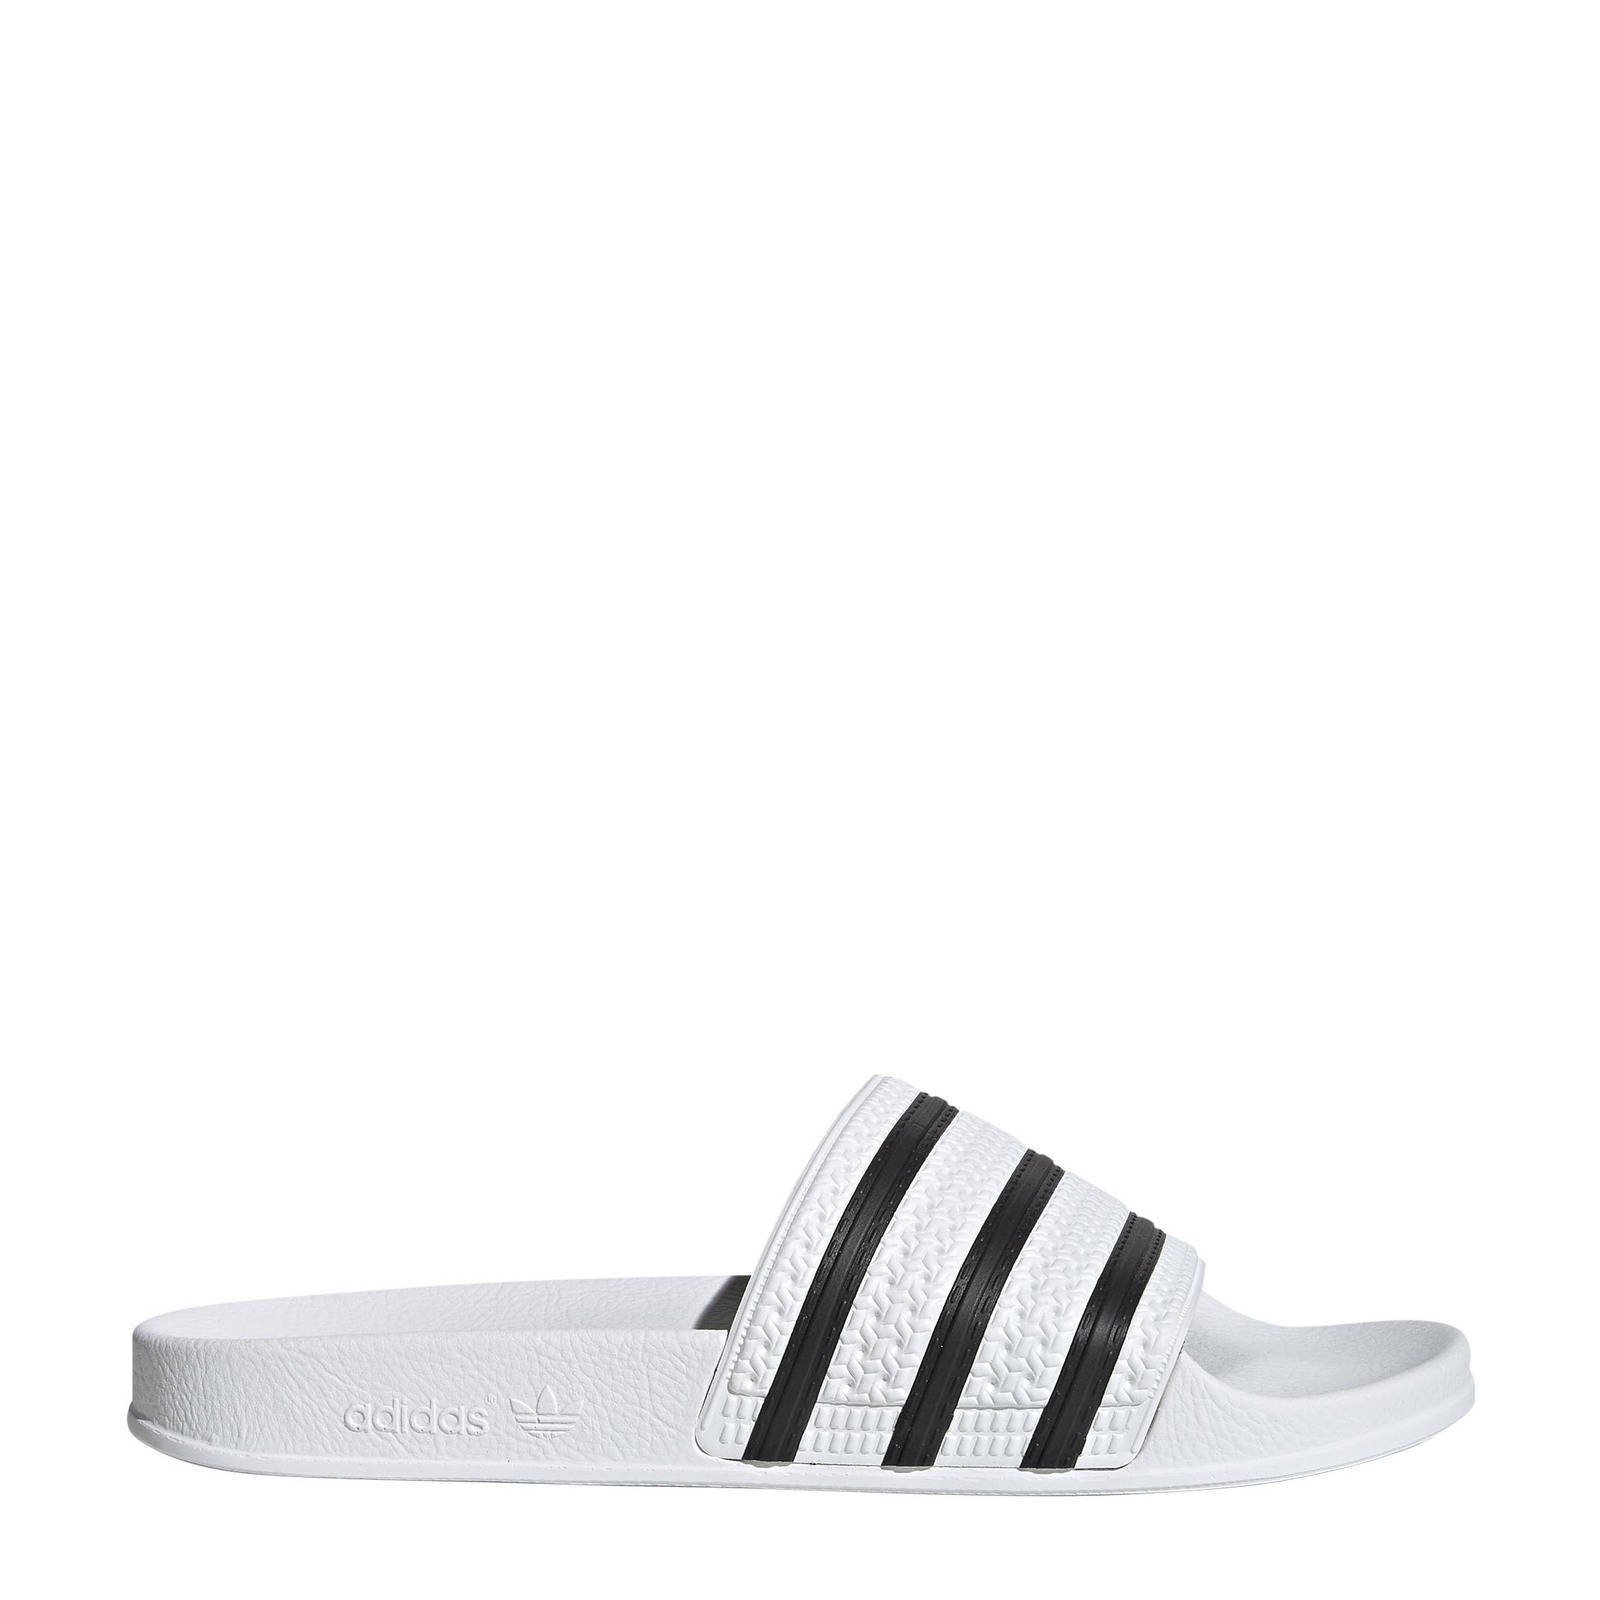 adidas Originals Adilette badslippers wit/zwart | wehkamp